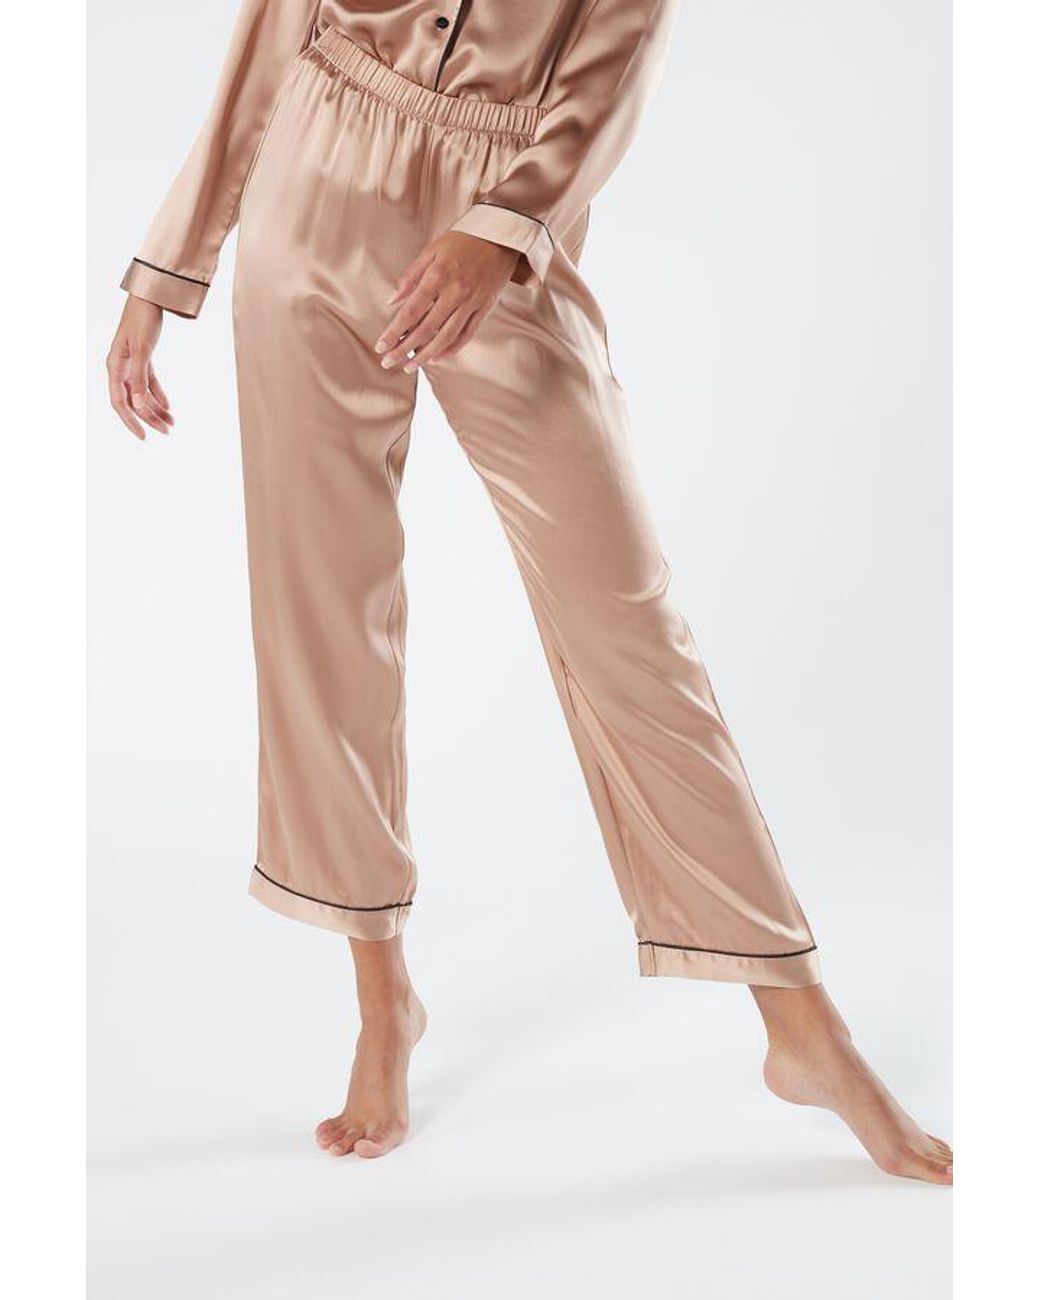 Intimissimi Silk Satin Pajama Pants in Pink - Lyst